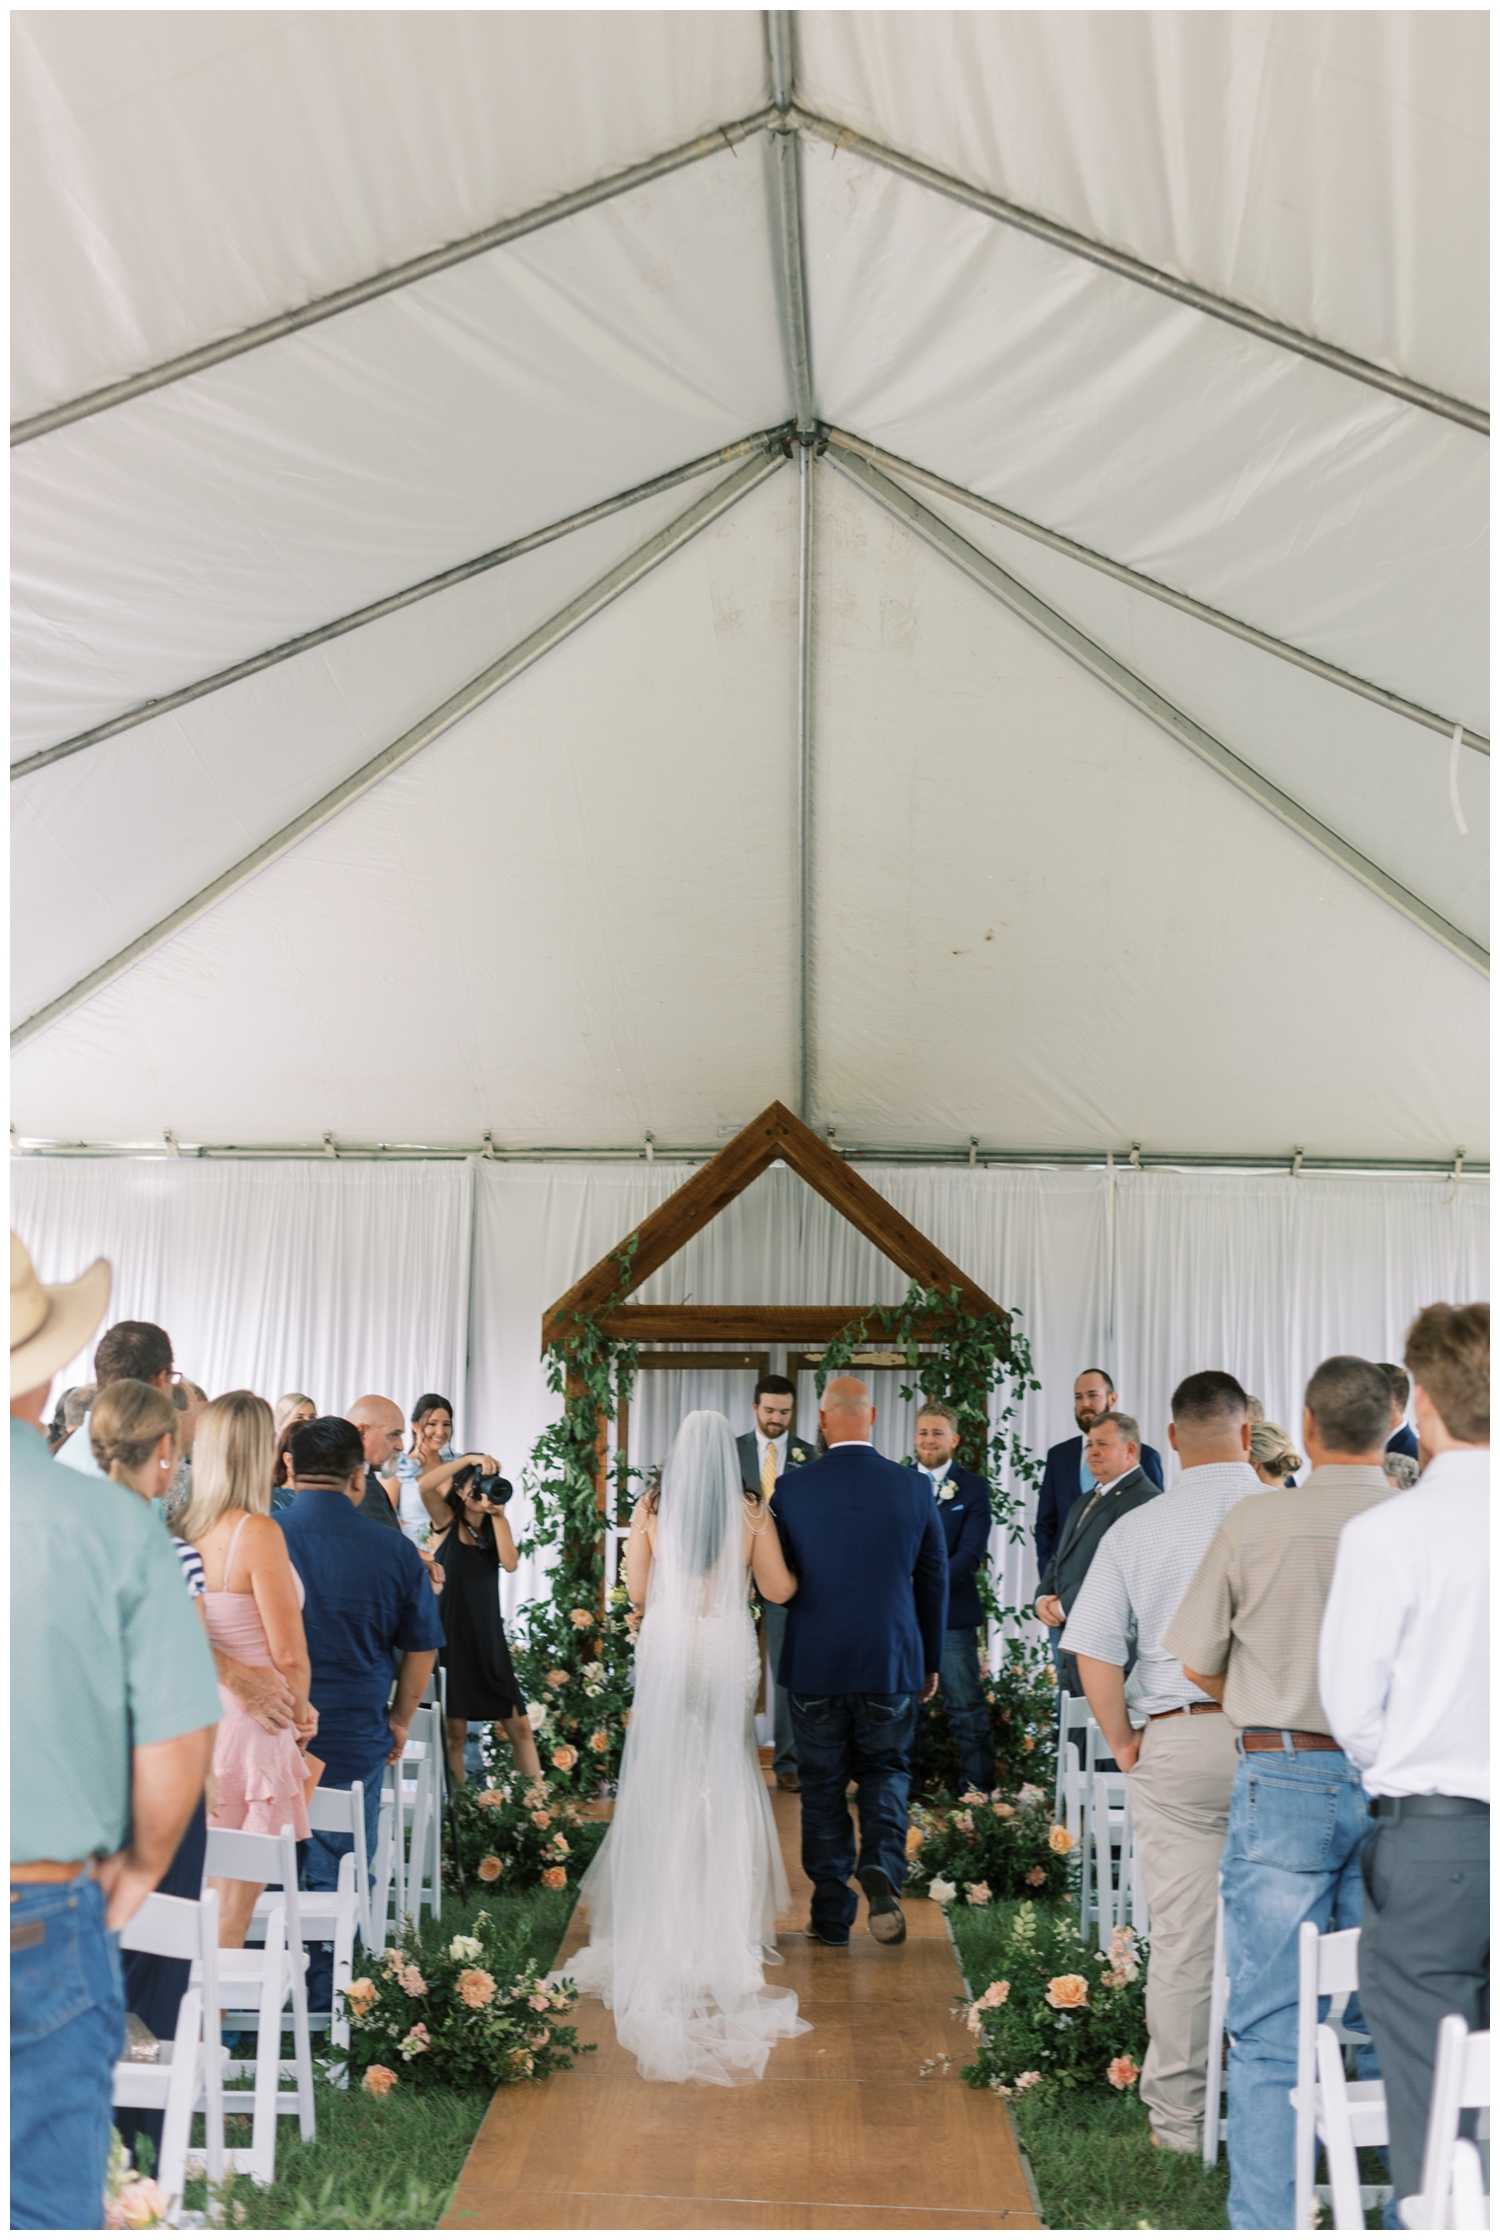 Bluebird Haven Estates Wedding outdoor tent ceremony